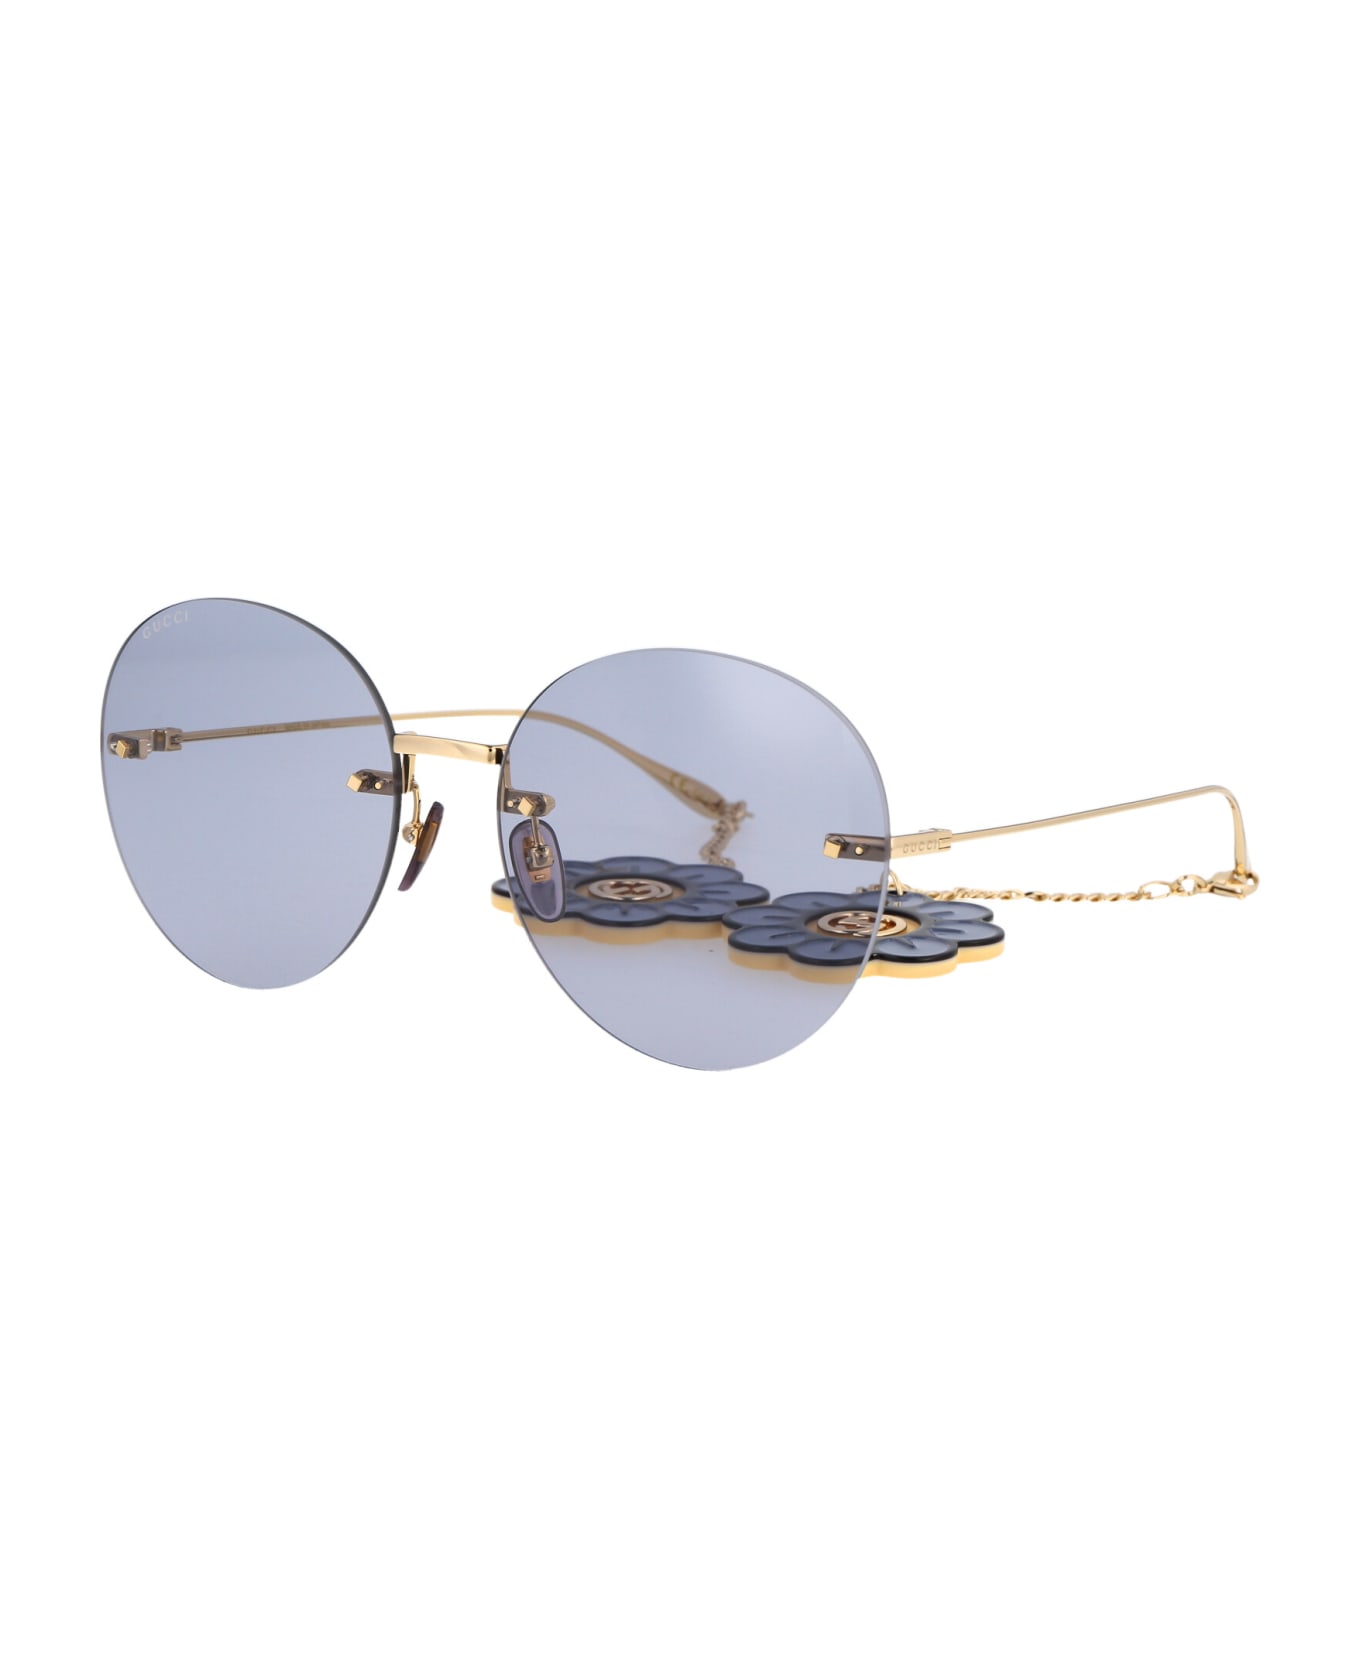 Gucci Eyewear Gg1149s Sunglasses - 006 GOLD GOLD VIOLET